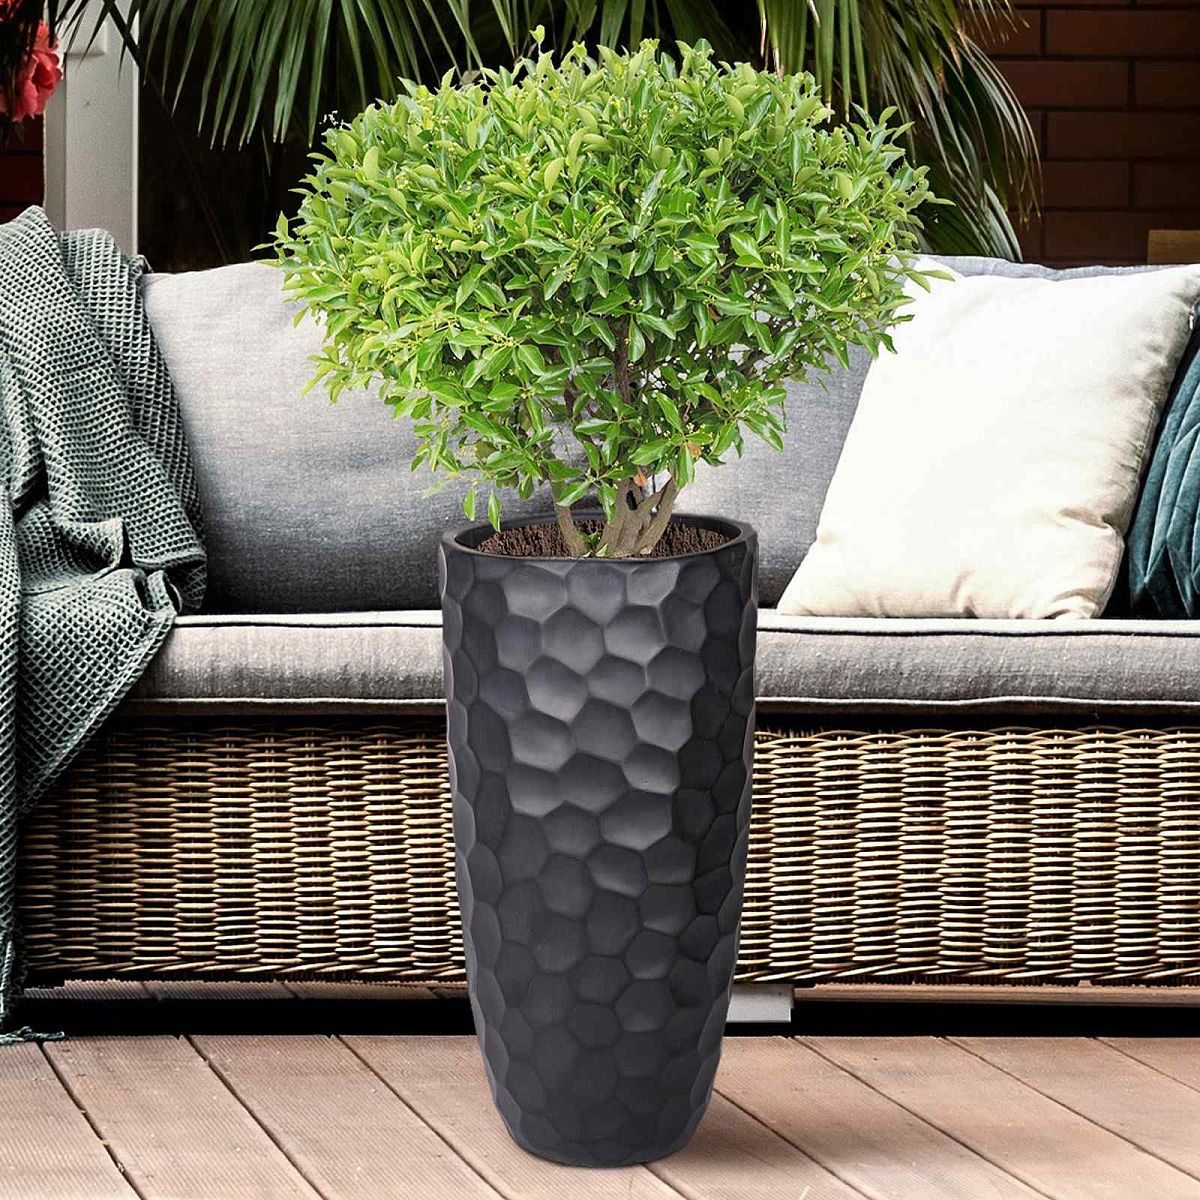 IDEALIST Lite Mosaic Style Tall Round Vase Planter Outdoor Plant Pot